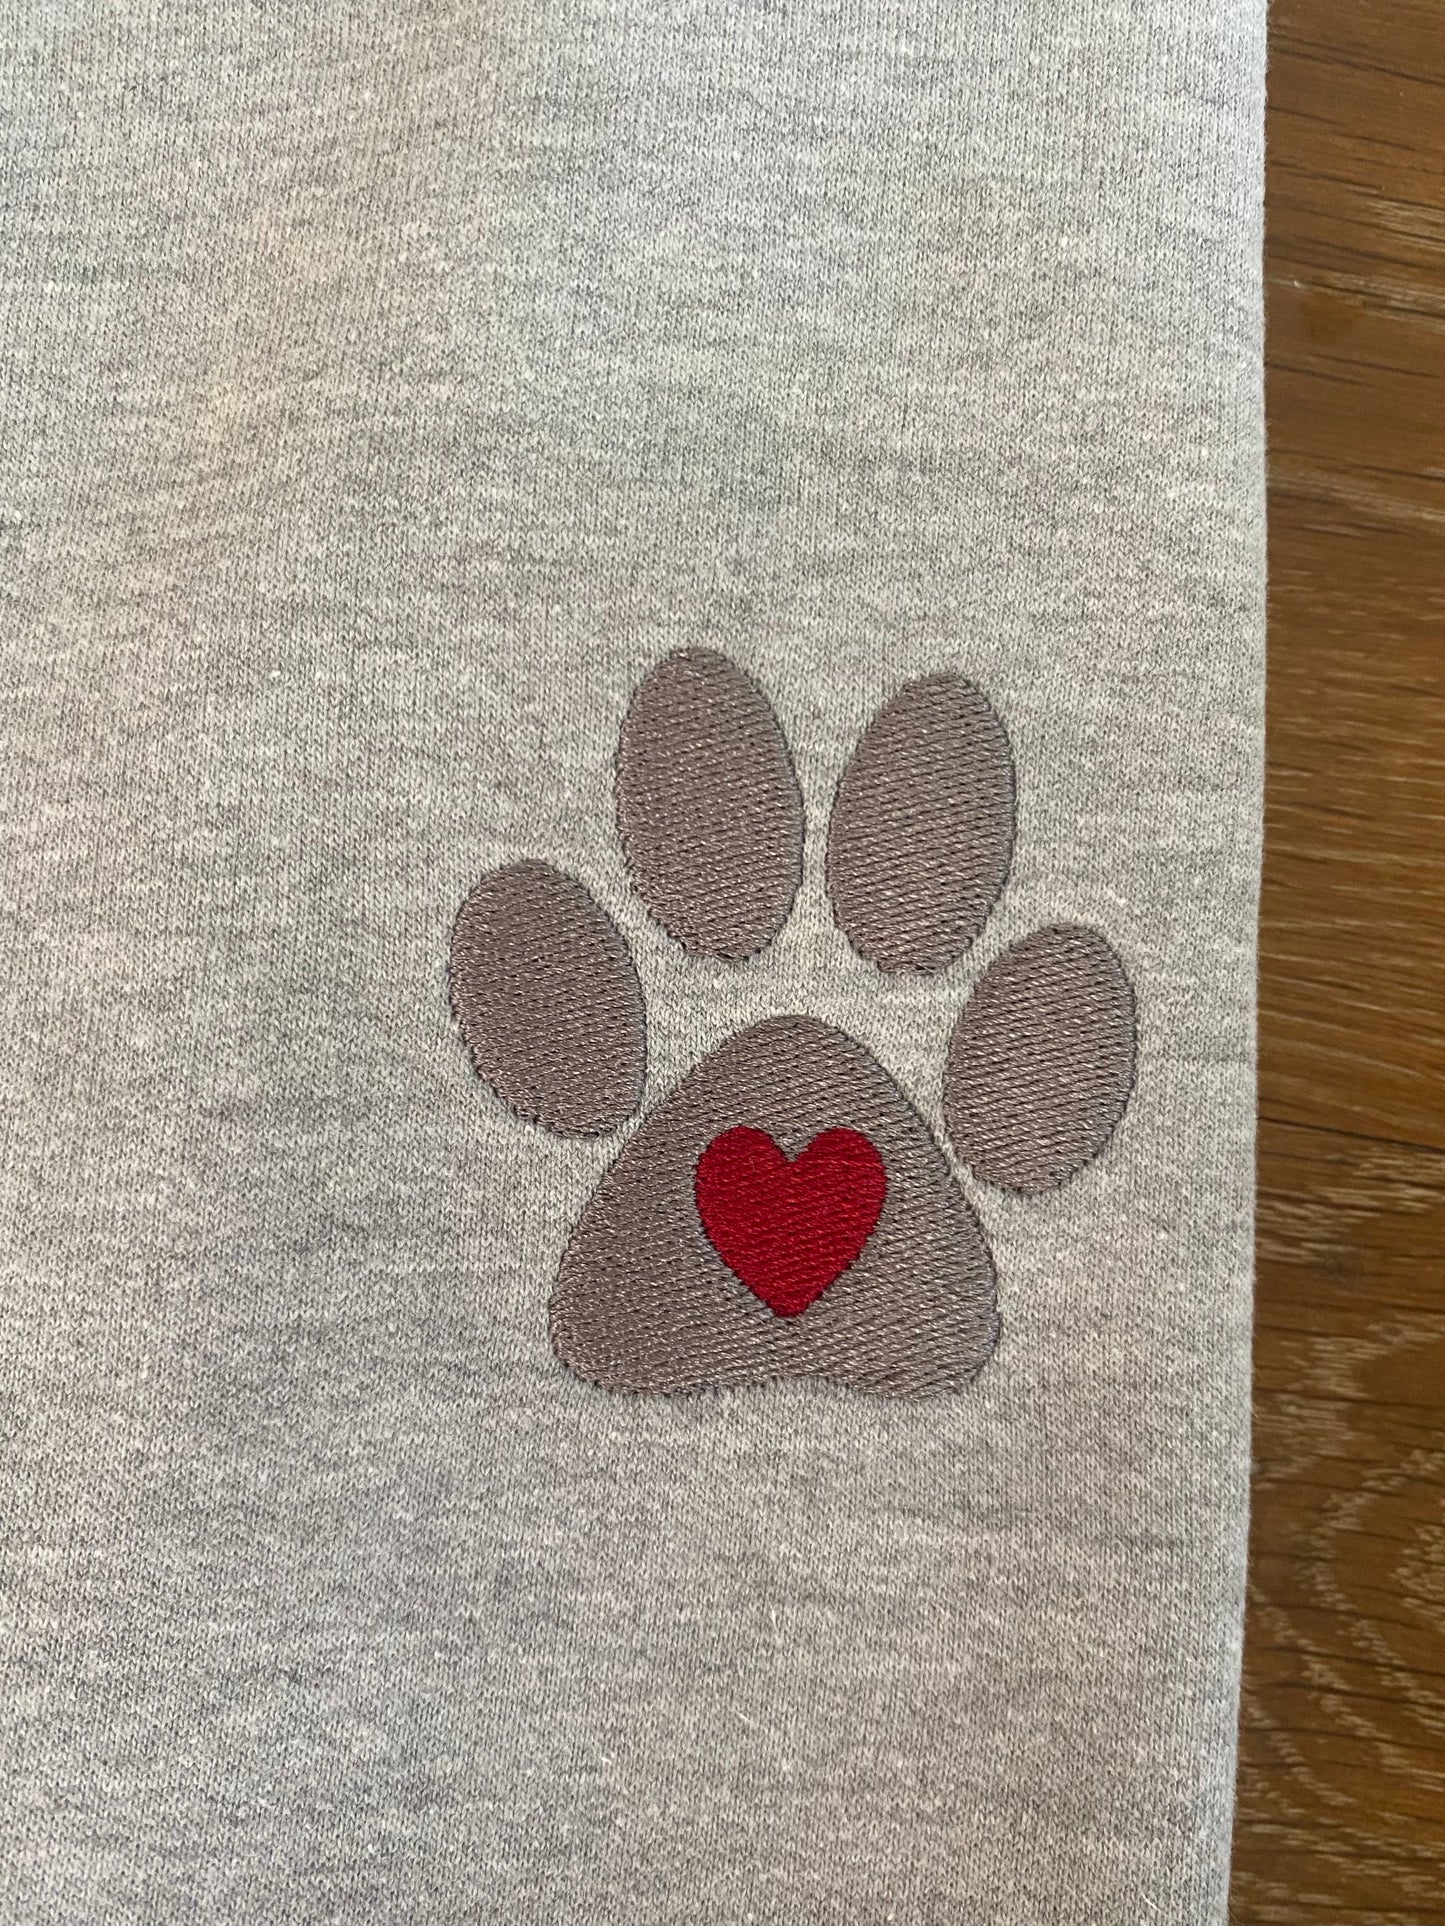 Dog Paw Print Embroidered Unisex Adults Sweatshirt